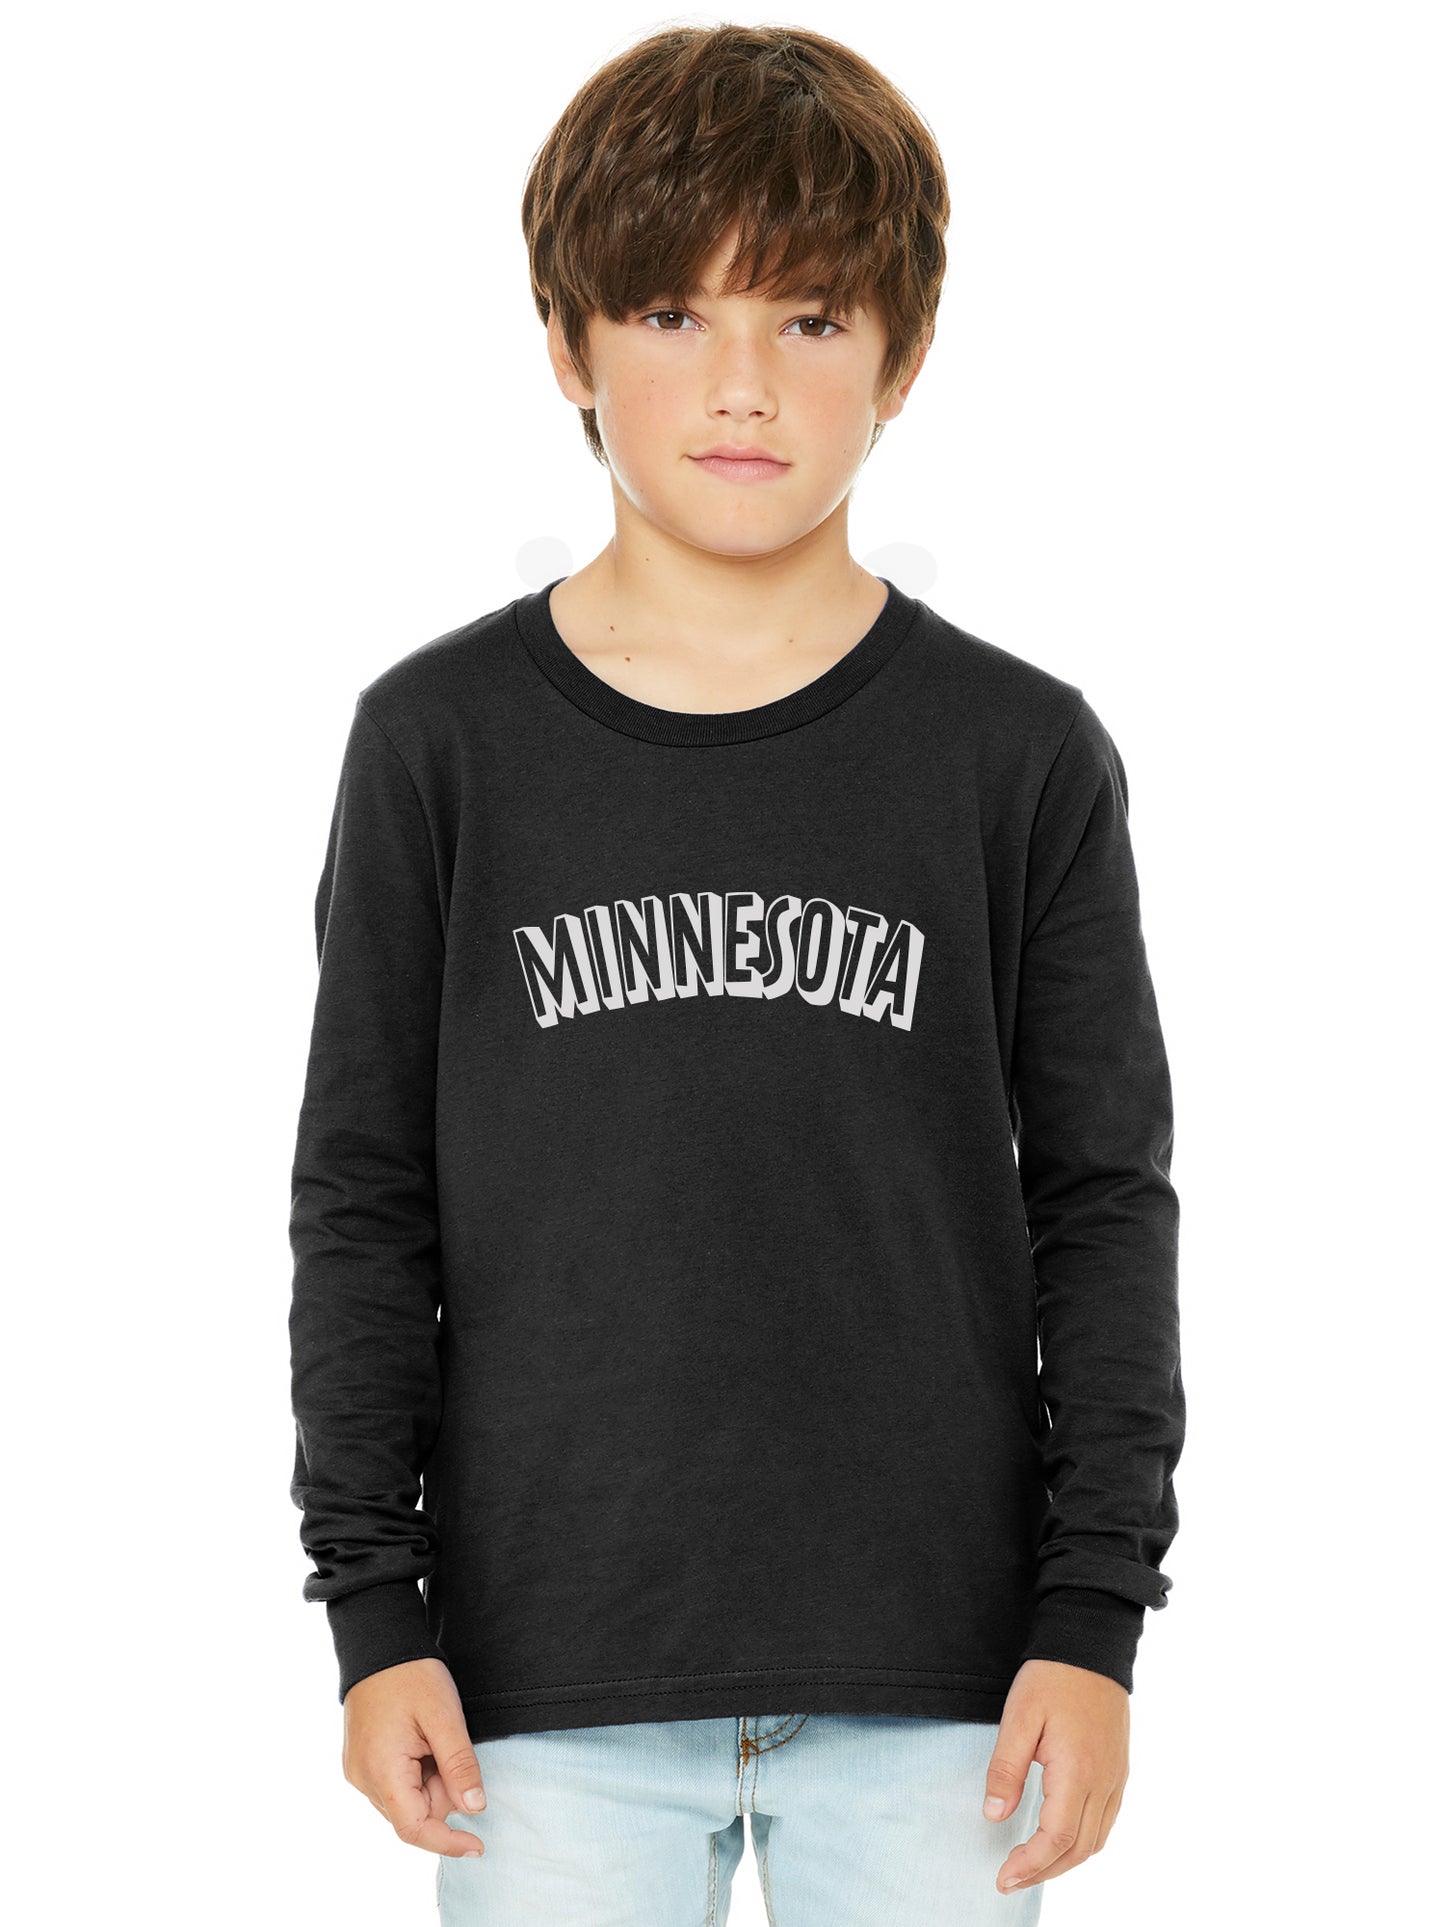 Daxton Youth Long Sleeve Minnesota Basic Tshirt